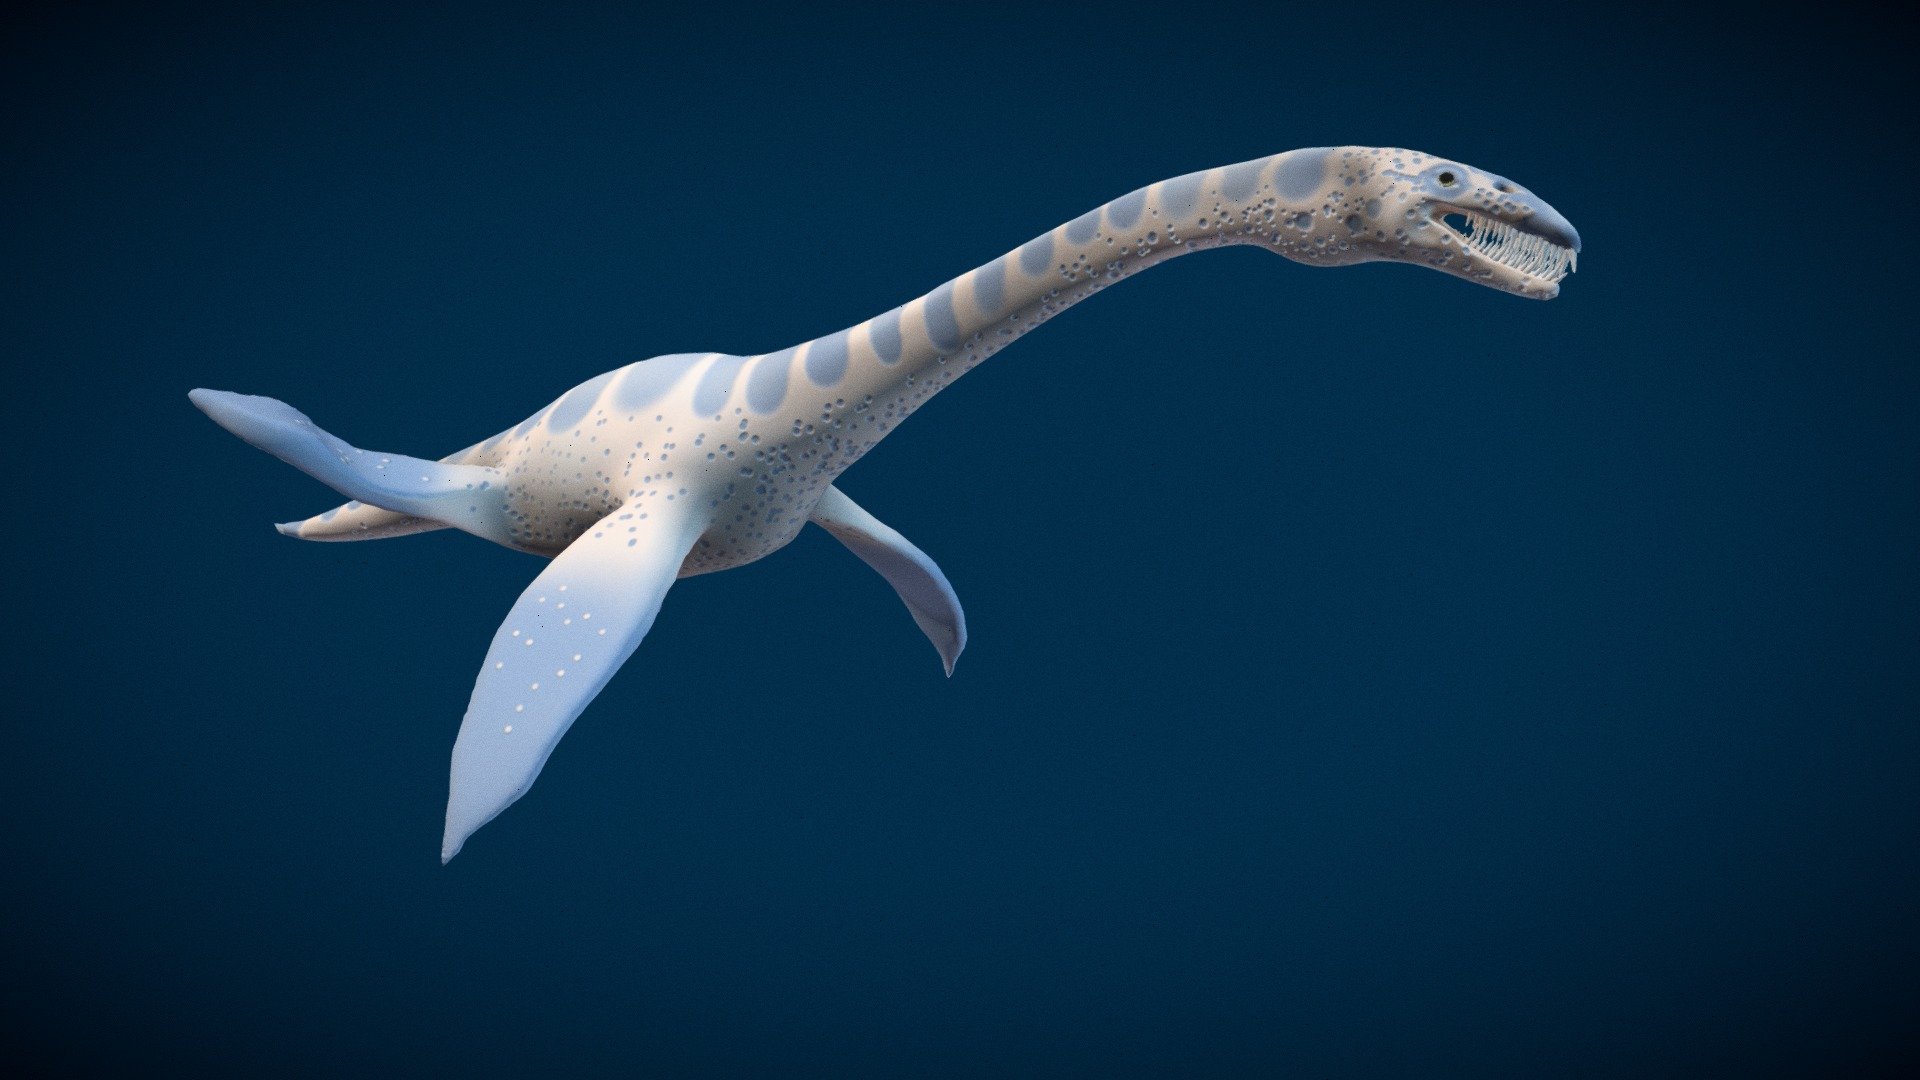 Original design - Nessie the plesiosaurus - 3D model by Robert_the_whale 3d model